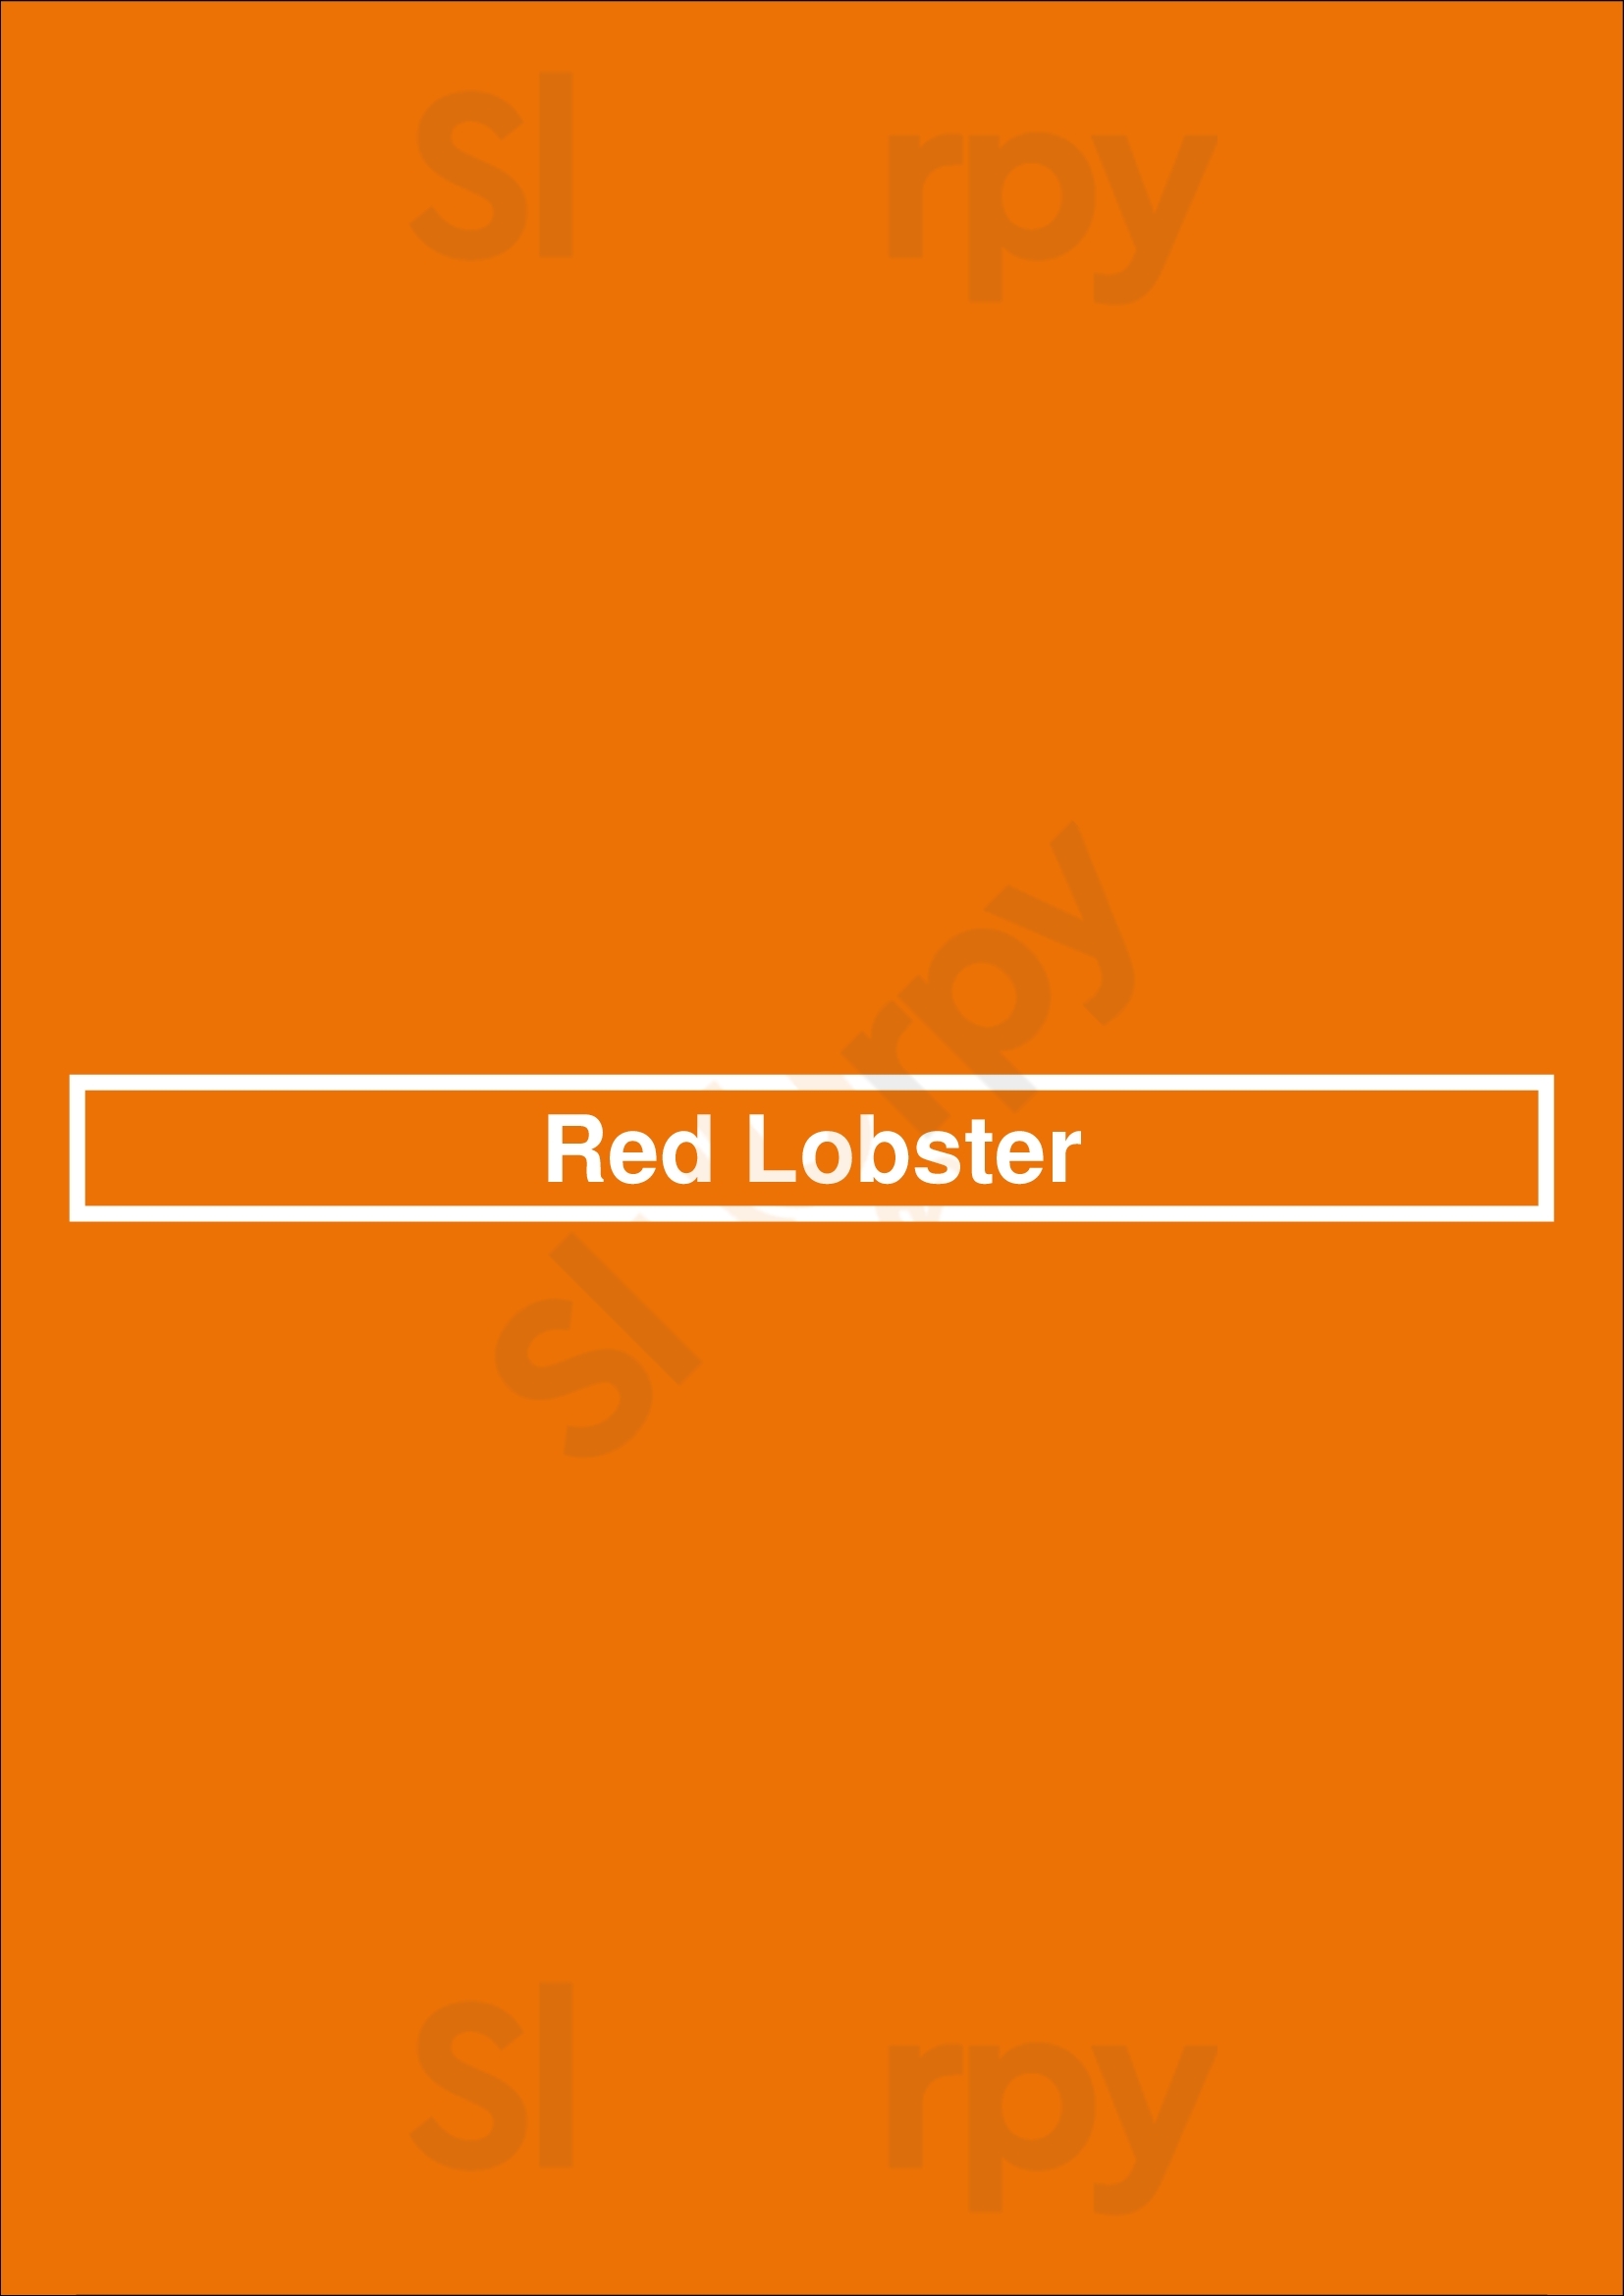 Red Lobster Avon Menu - 1